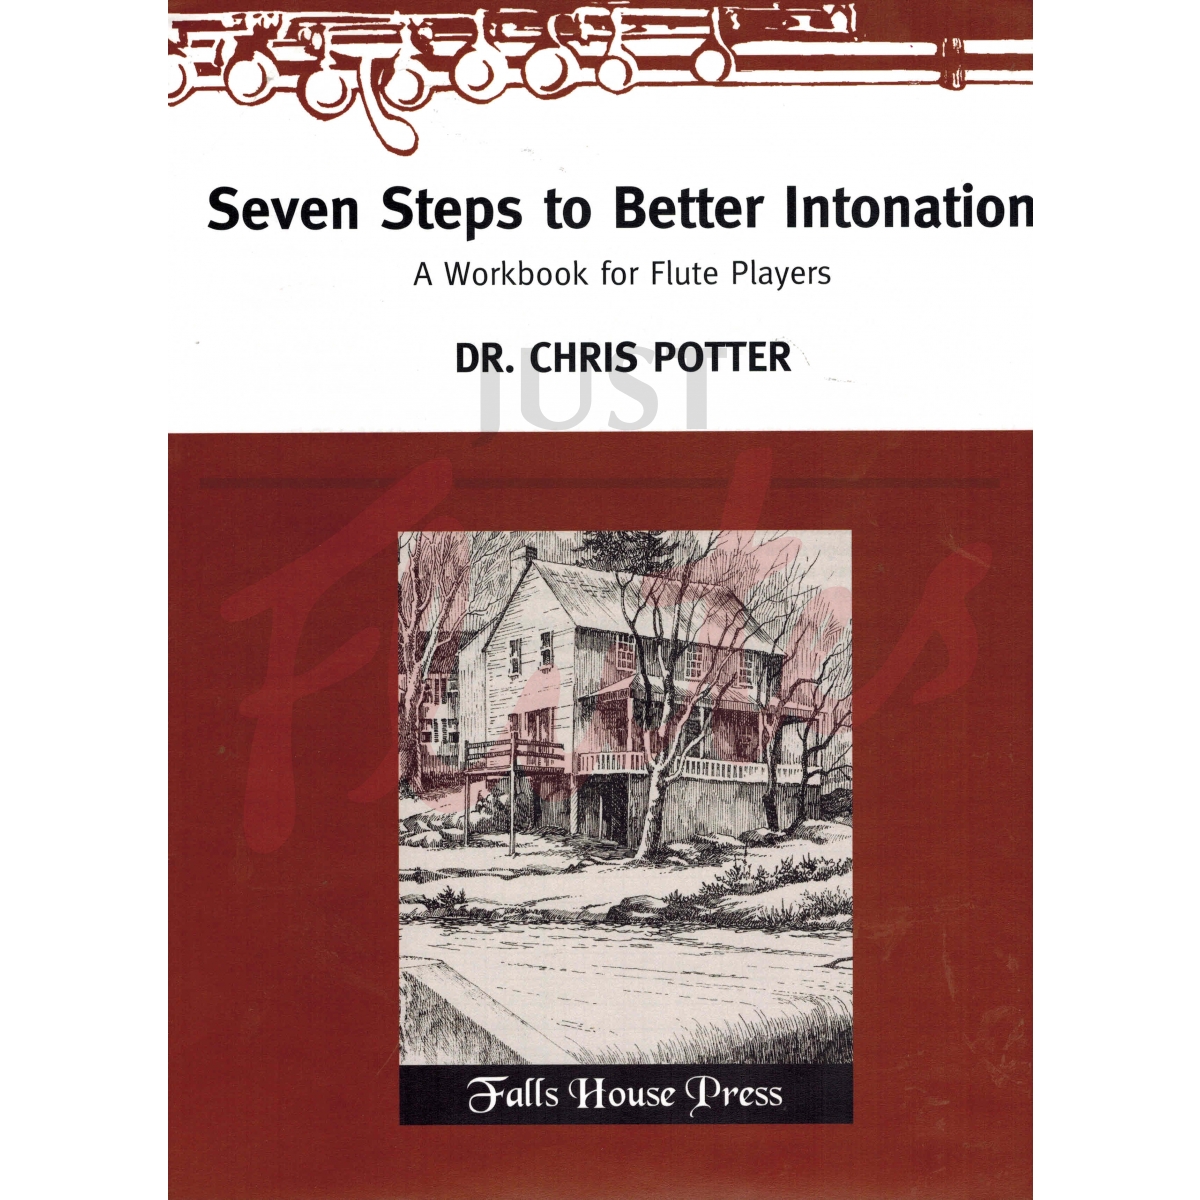 Seven Steps to Better Intonation